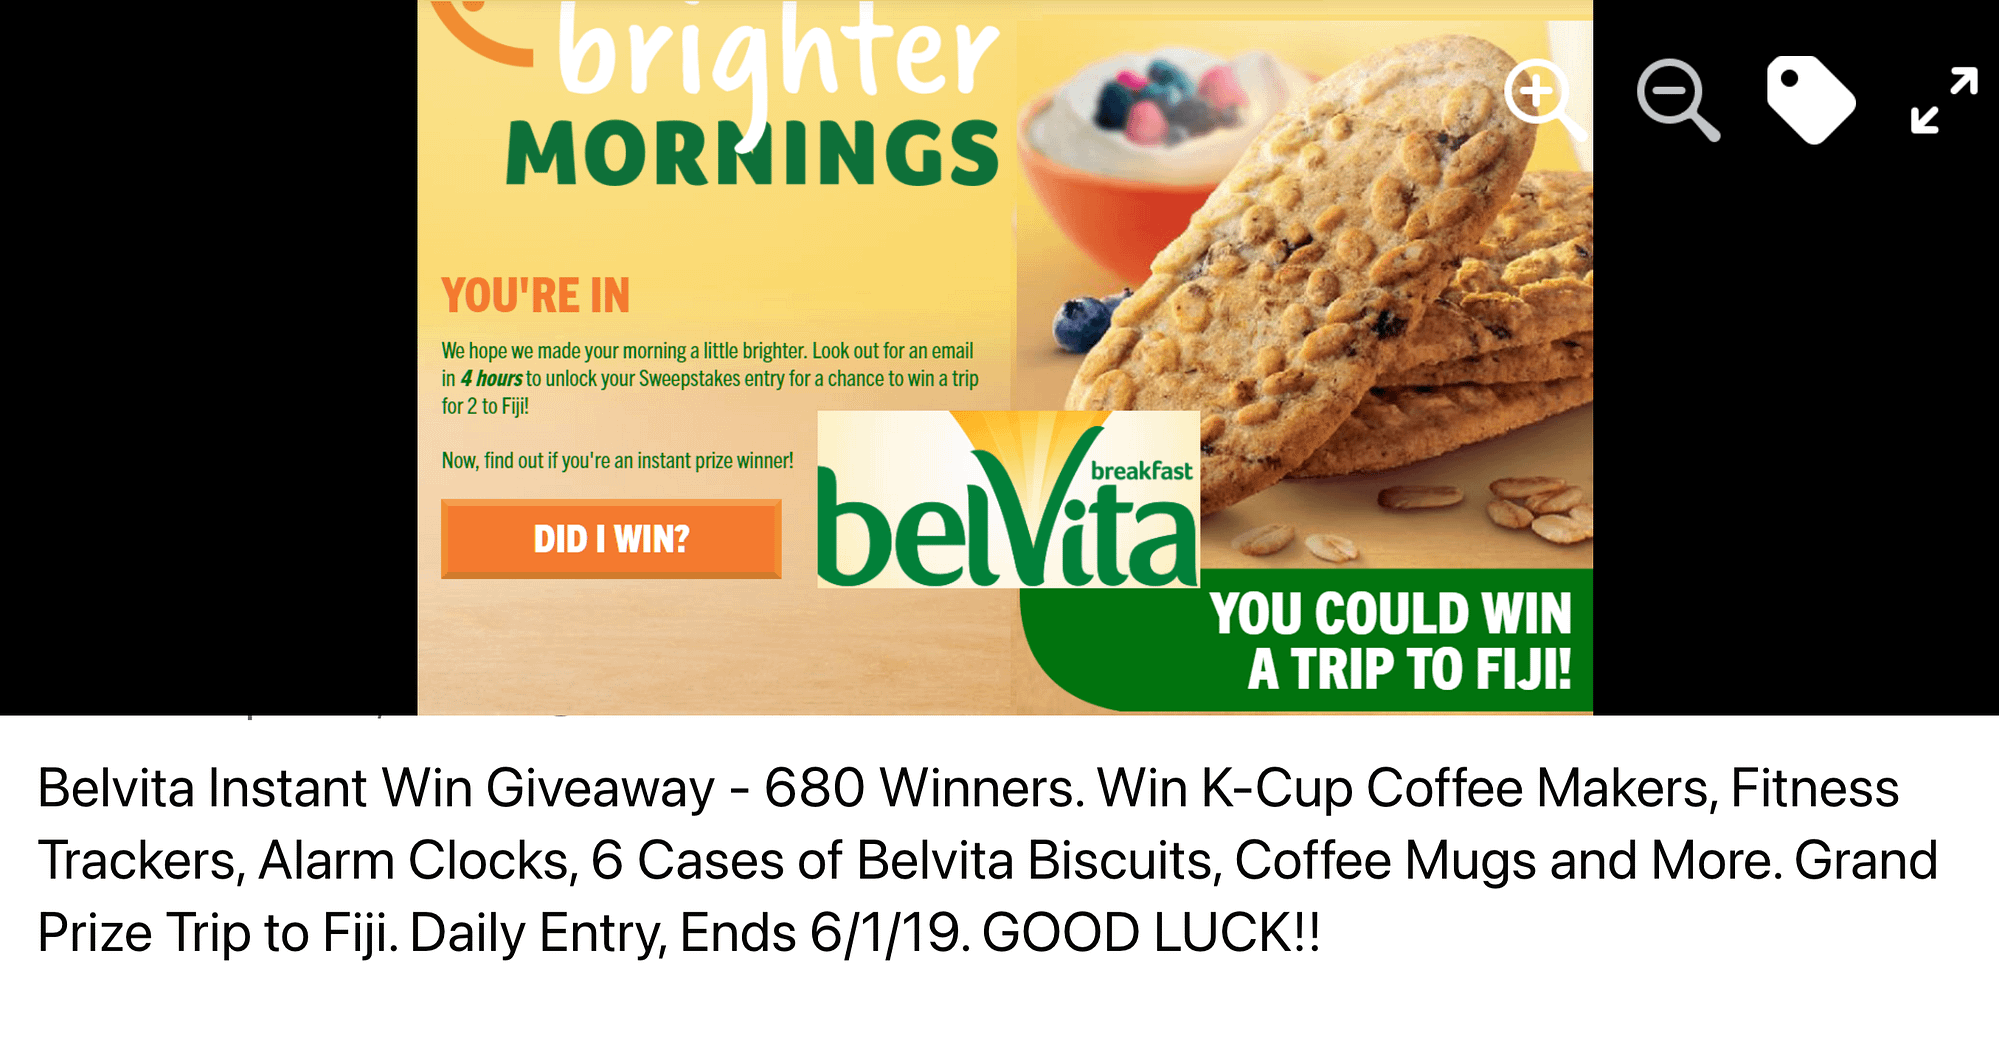 Belvita Facebook contest with big-ticket prizes